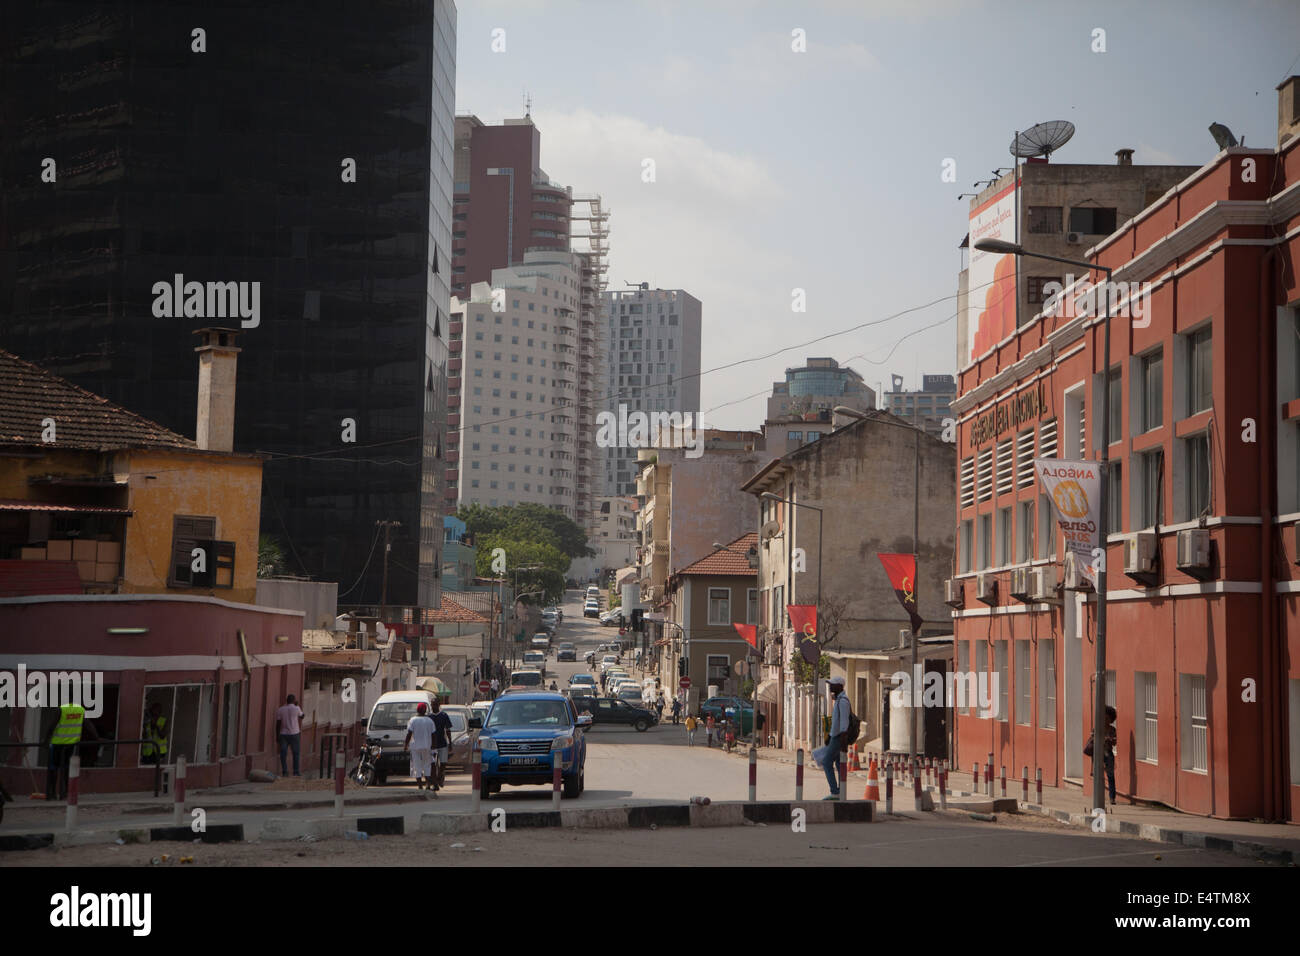 Angola, Luanda, la vida en la ciudad costera de África la vida diaria Foto de stock